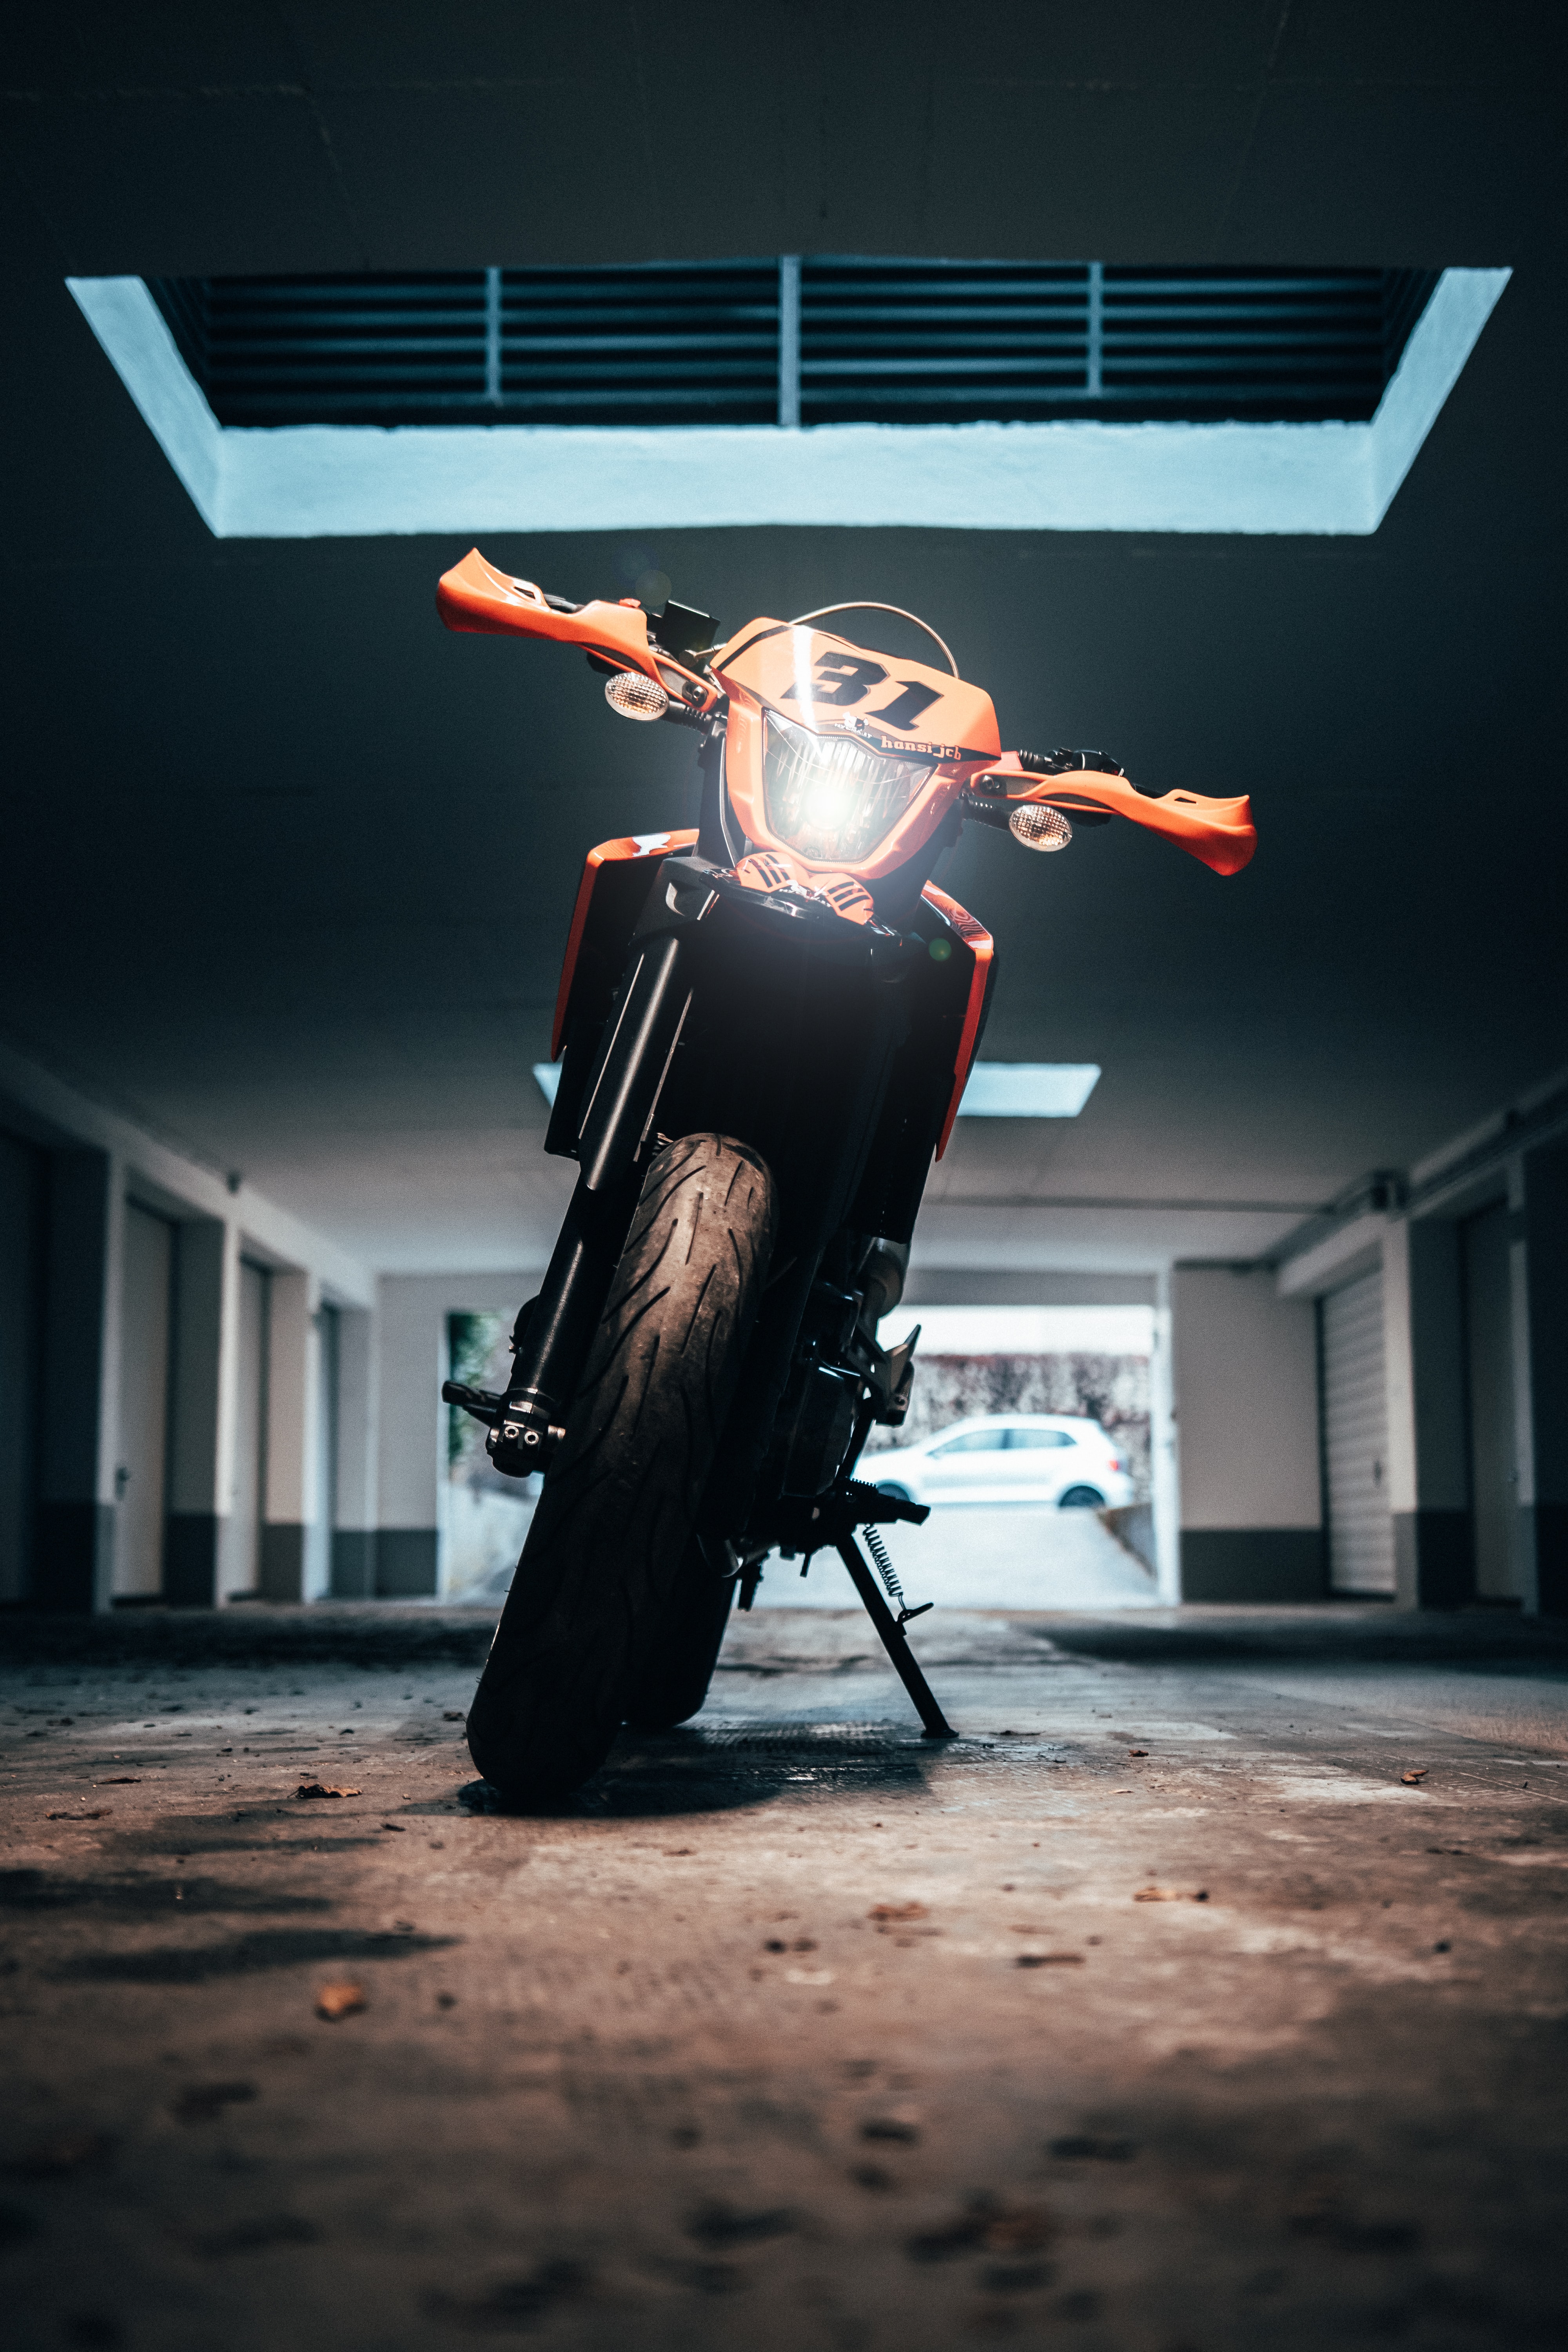 front view, motorcycles, bike, orange, motorcycle 2160p